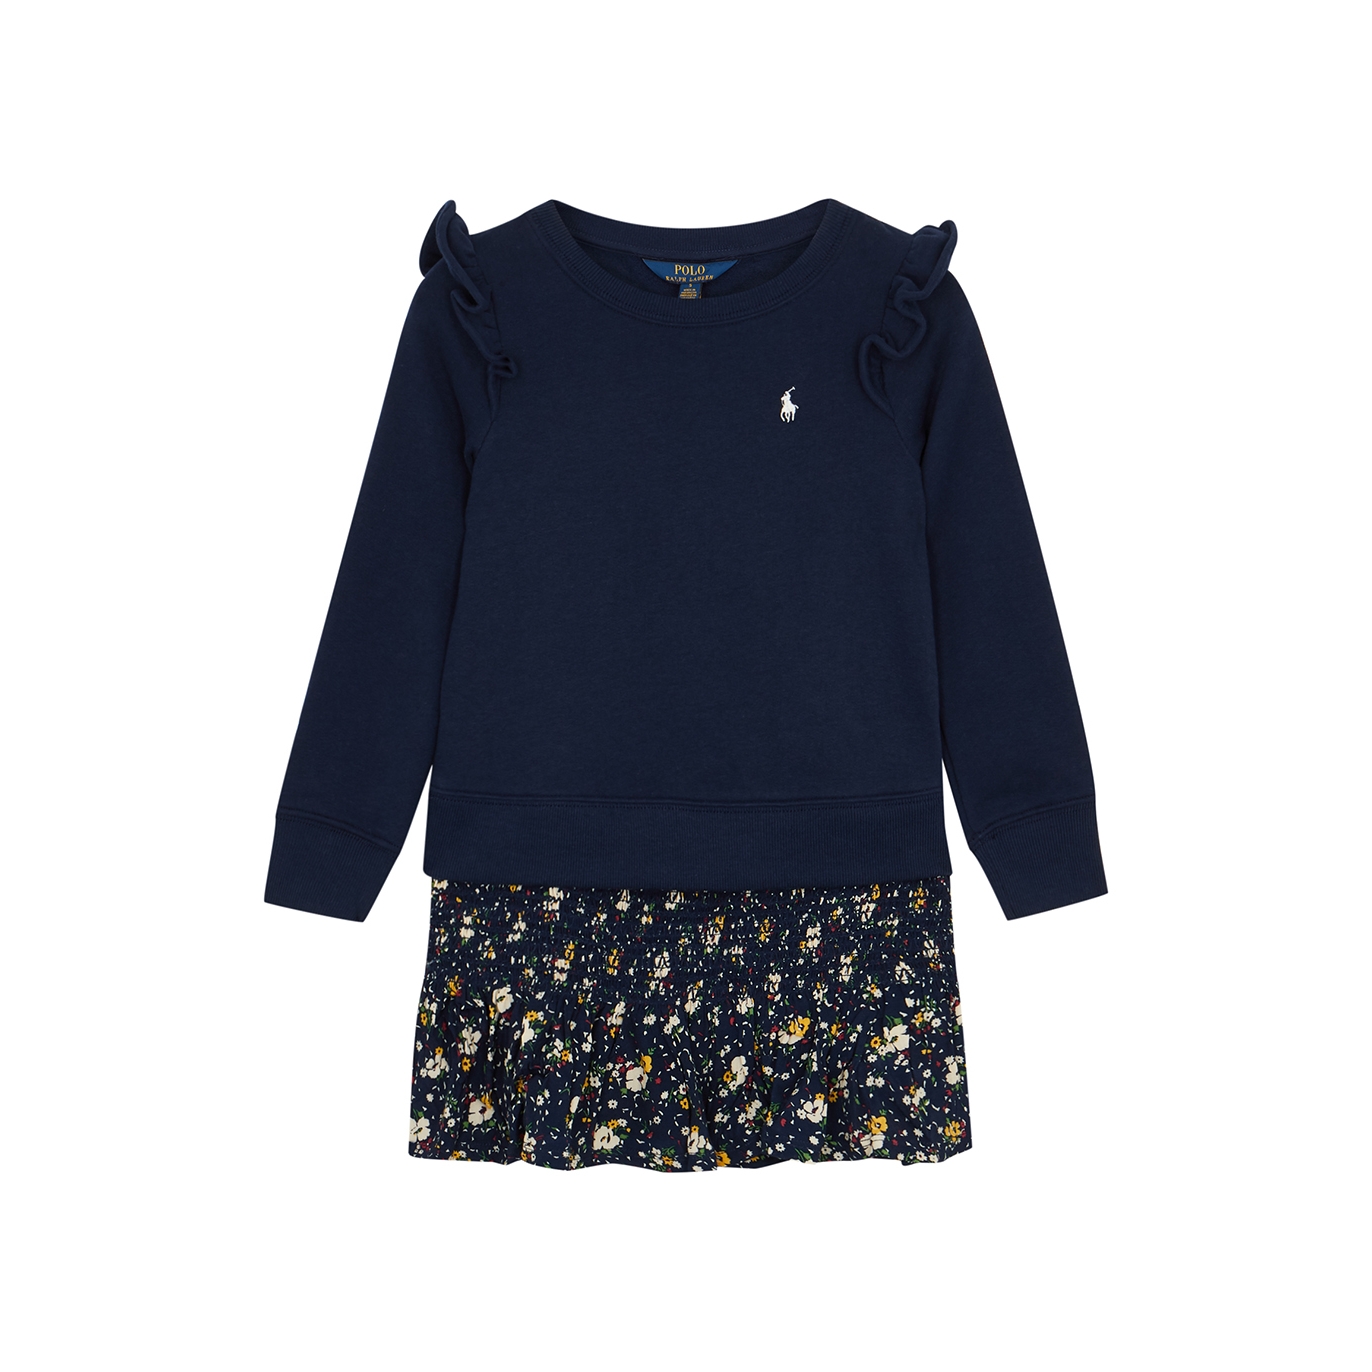 Polo Ralph Lauren Kids Navy Layered Cotton-blend Sweatshirt Dress (3-6 Years) - Navy & Other